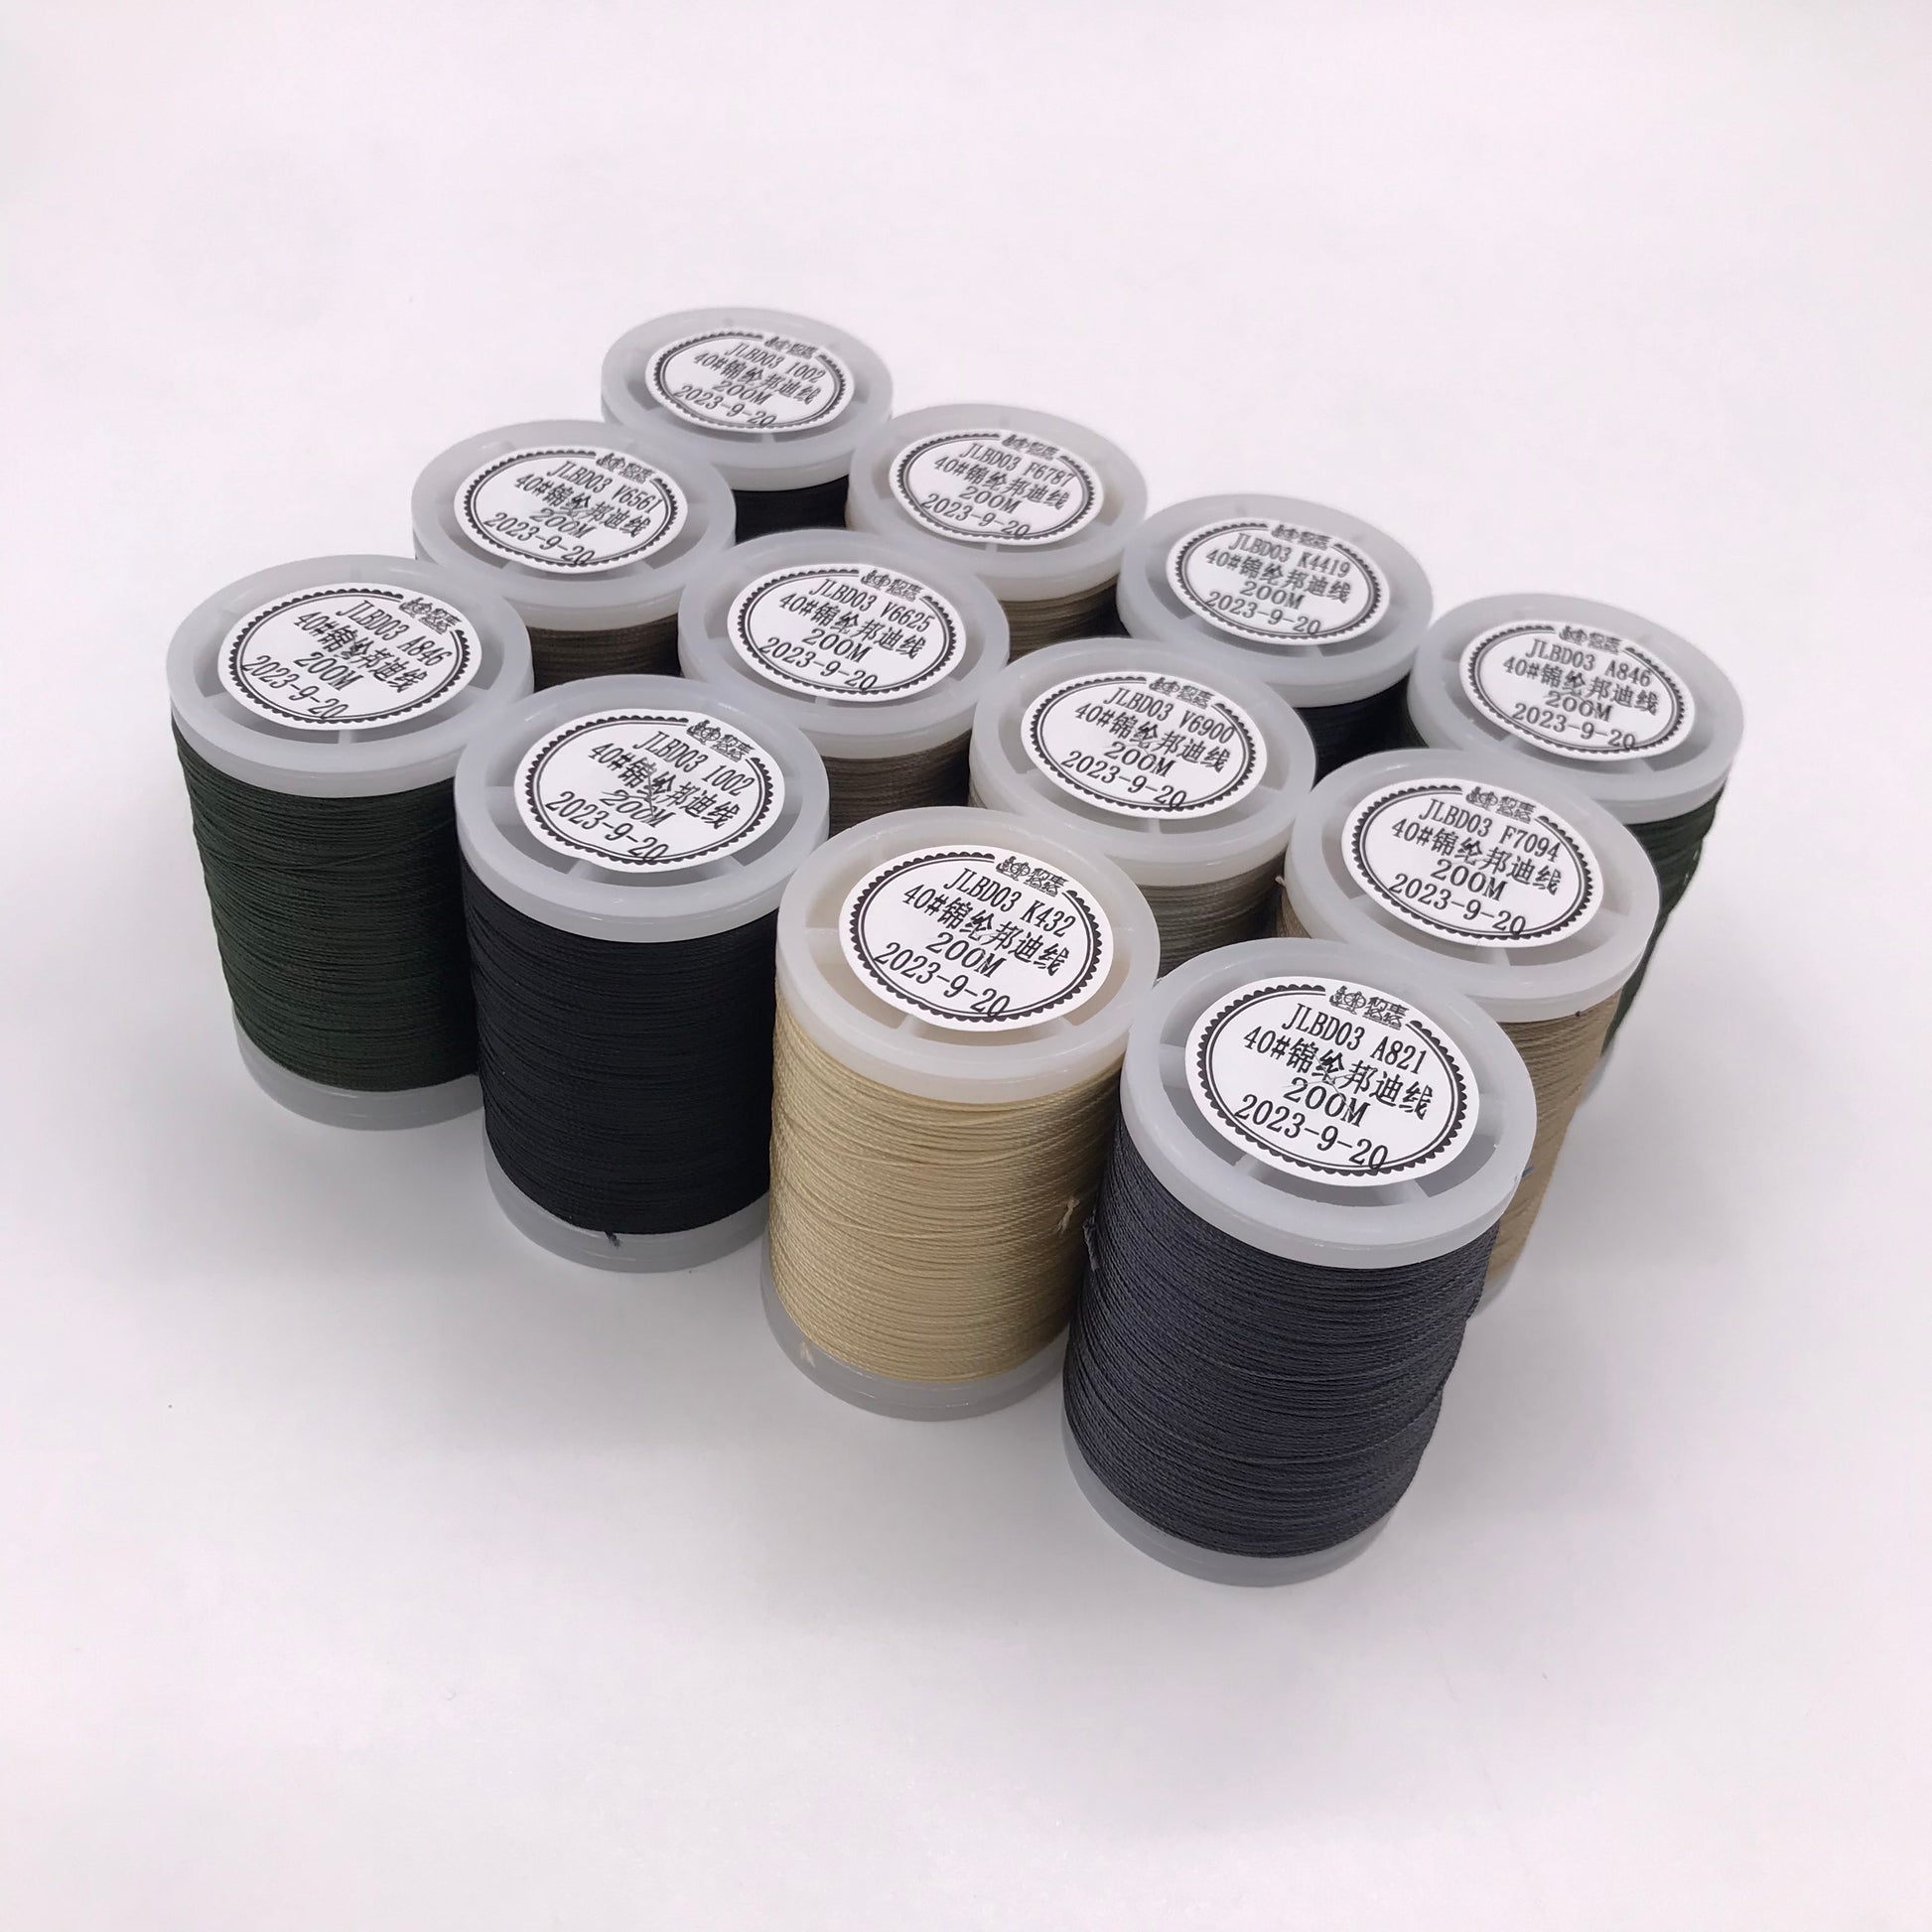 Nylon Bonded Thread Kit